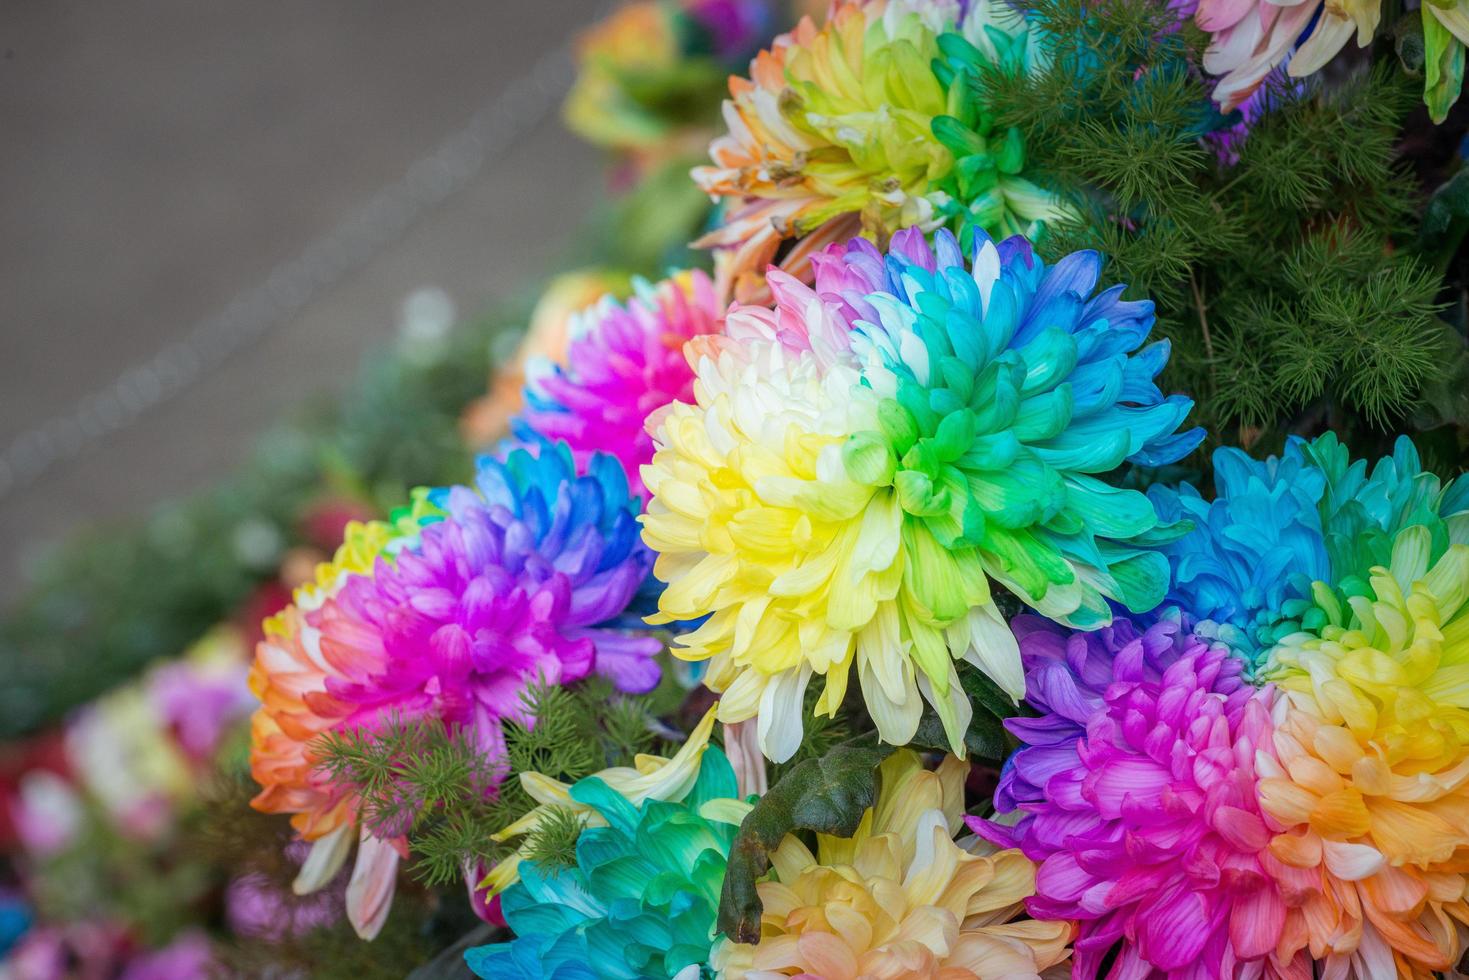 The rainbow Chrysanthemum the new innovative plants from Netherlands. photo